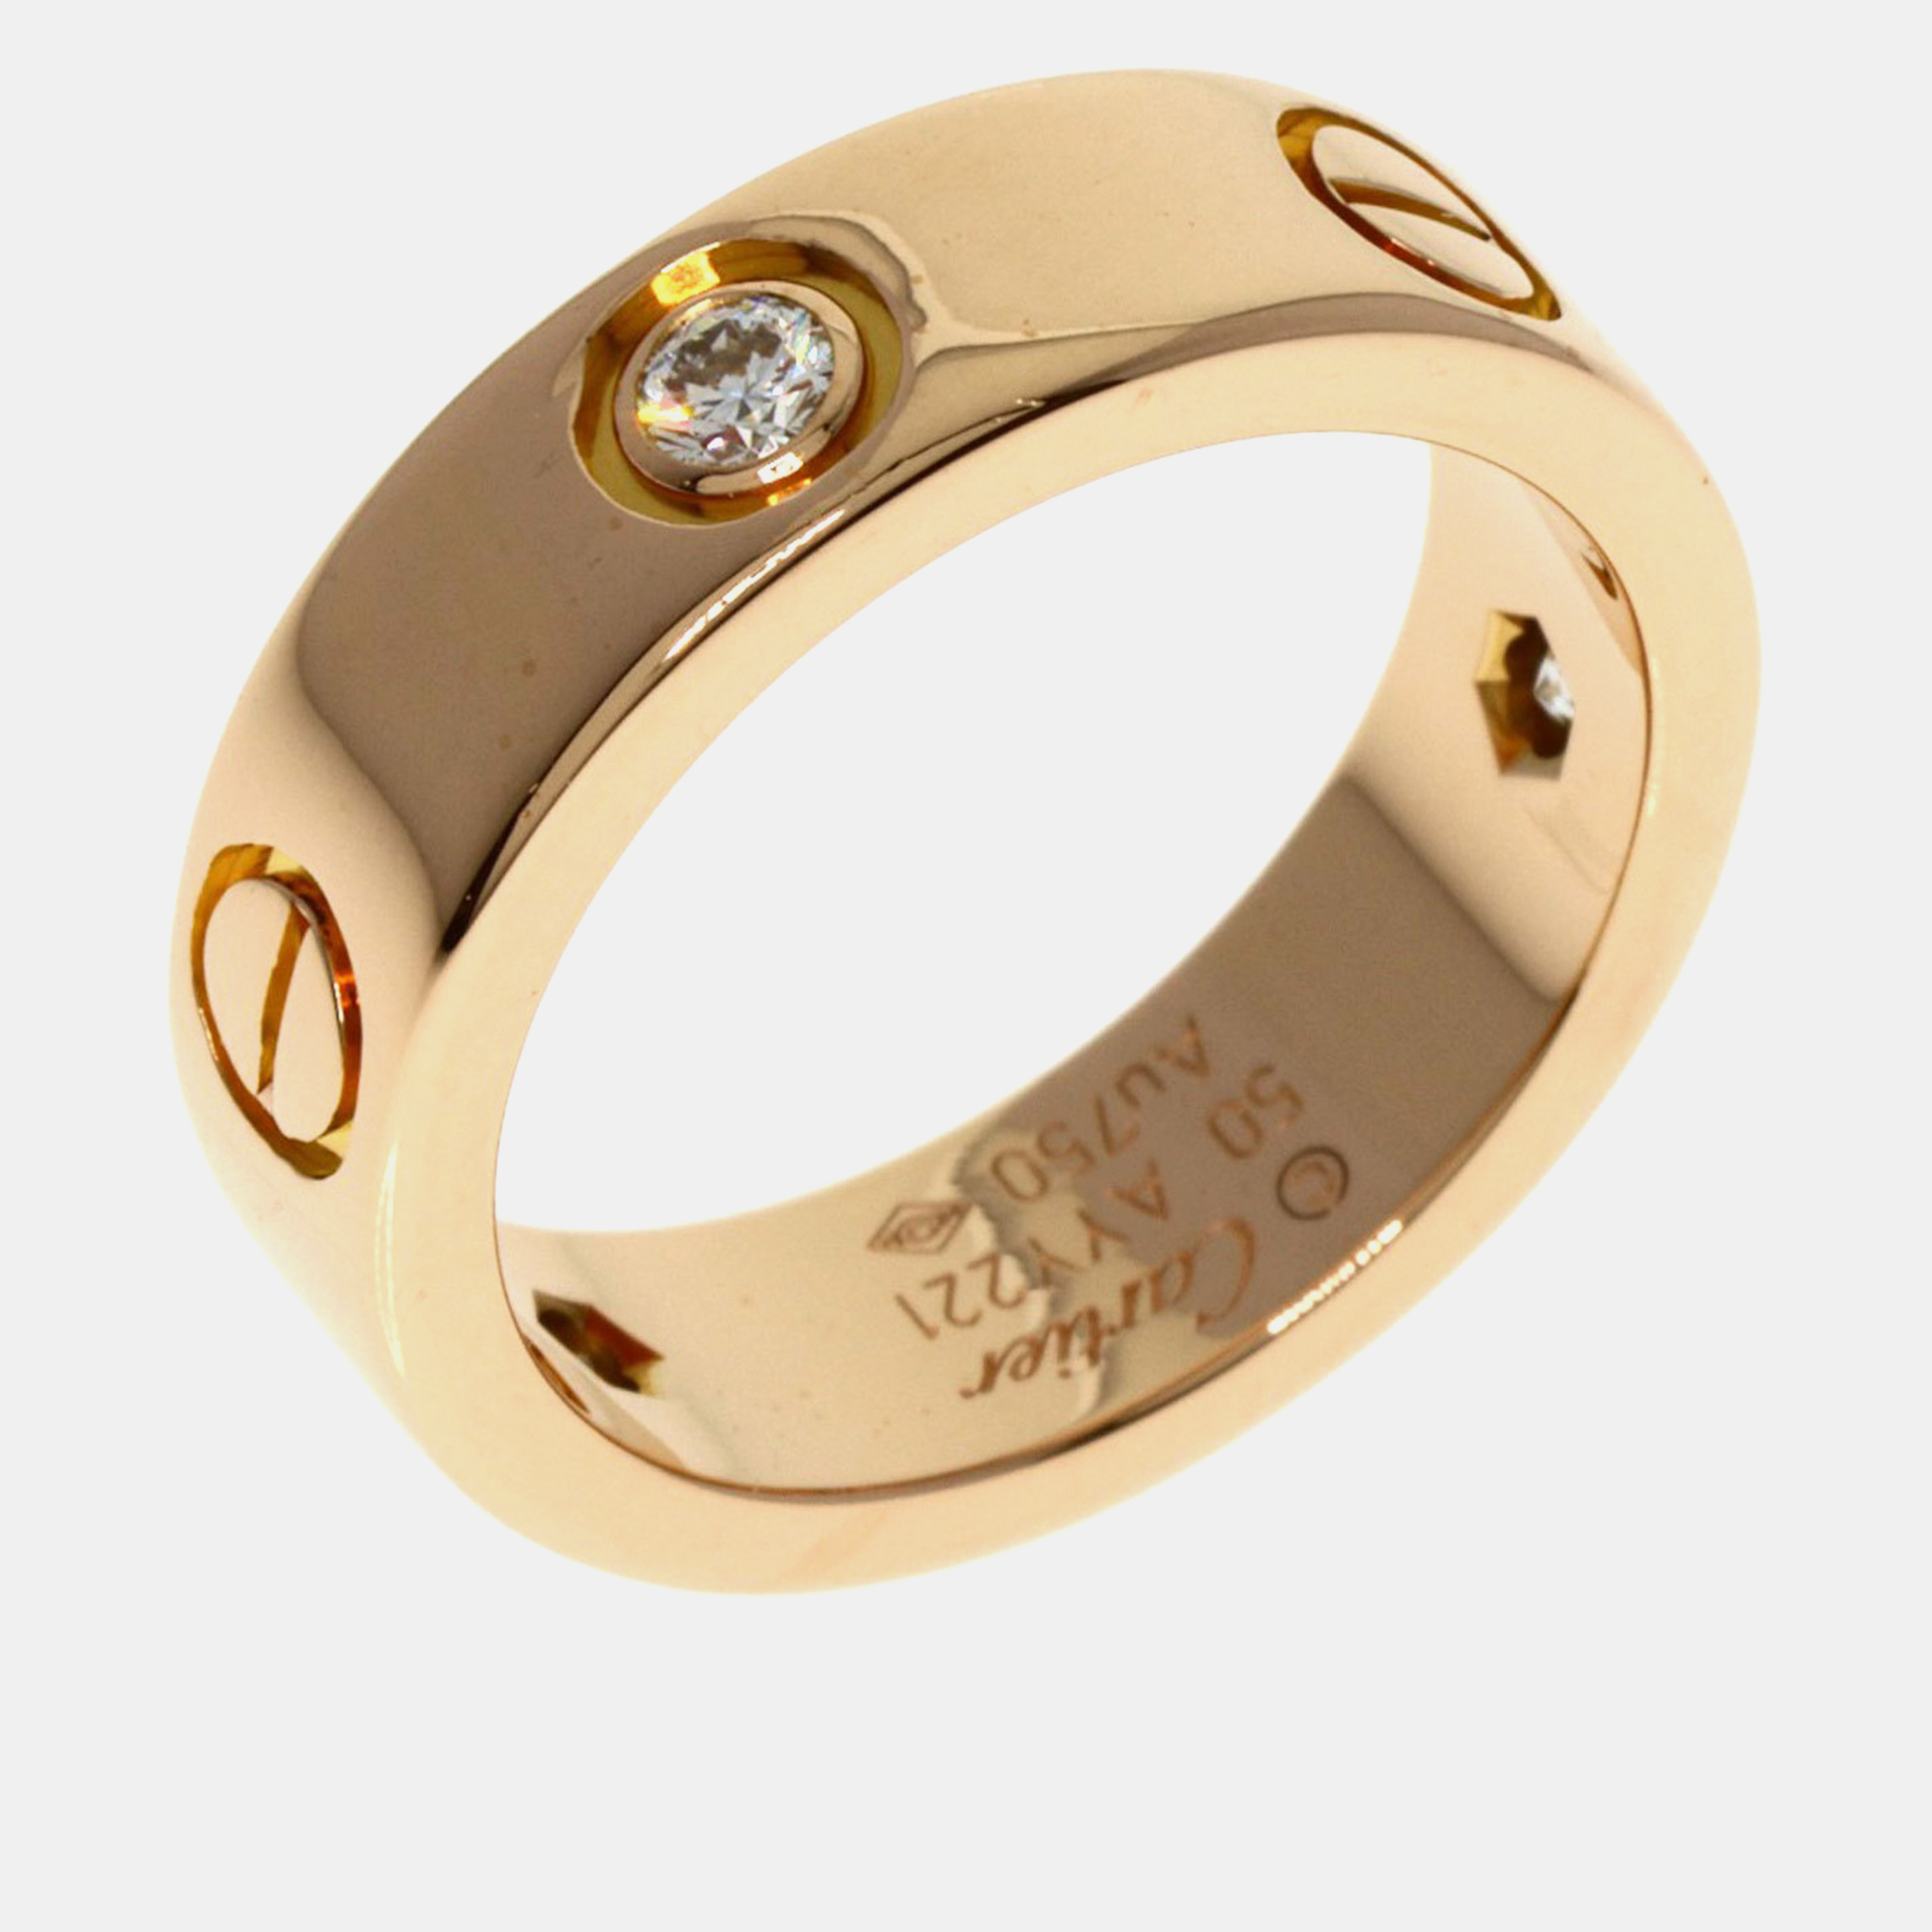 Cartier 18k rose gold and diamond love band ring eu 50